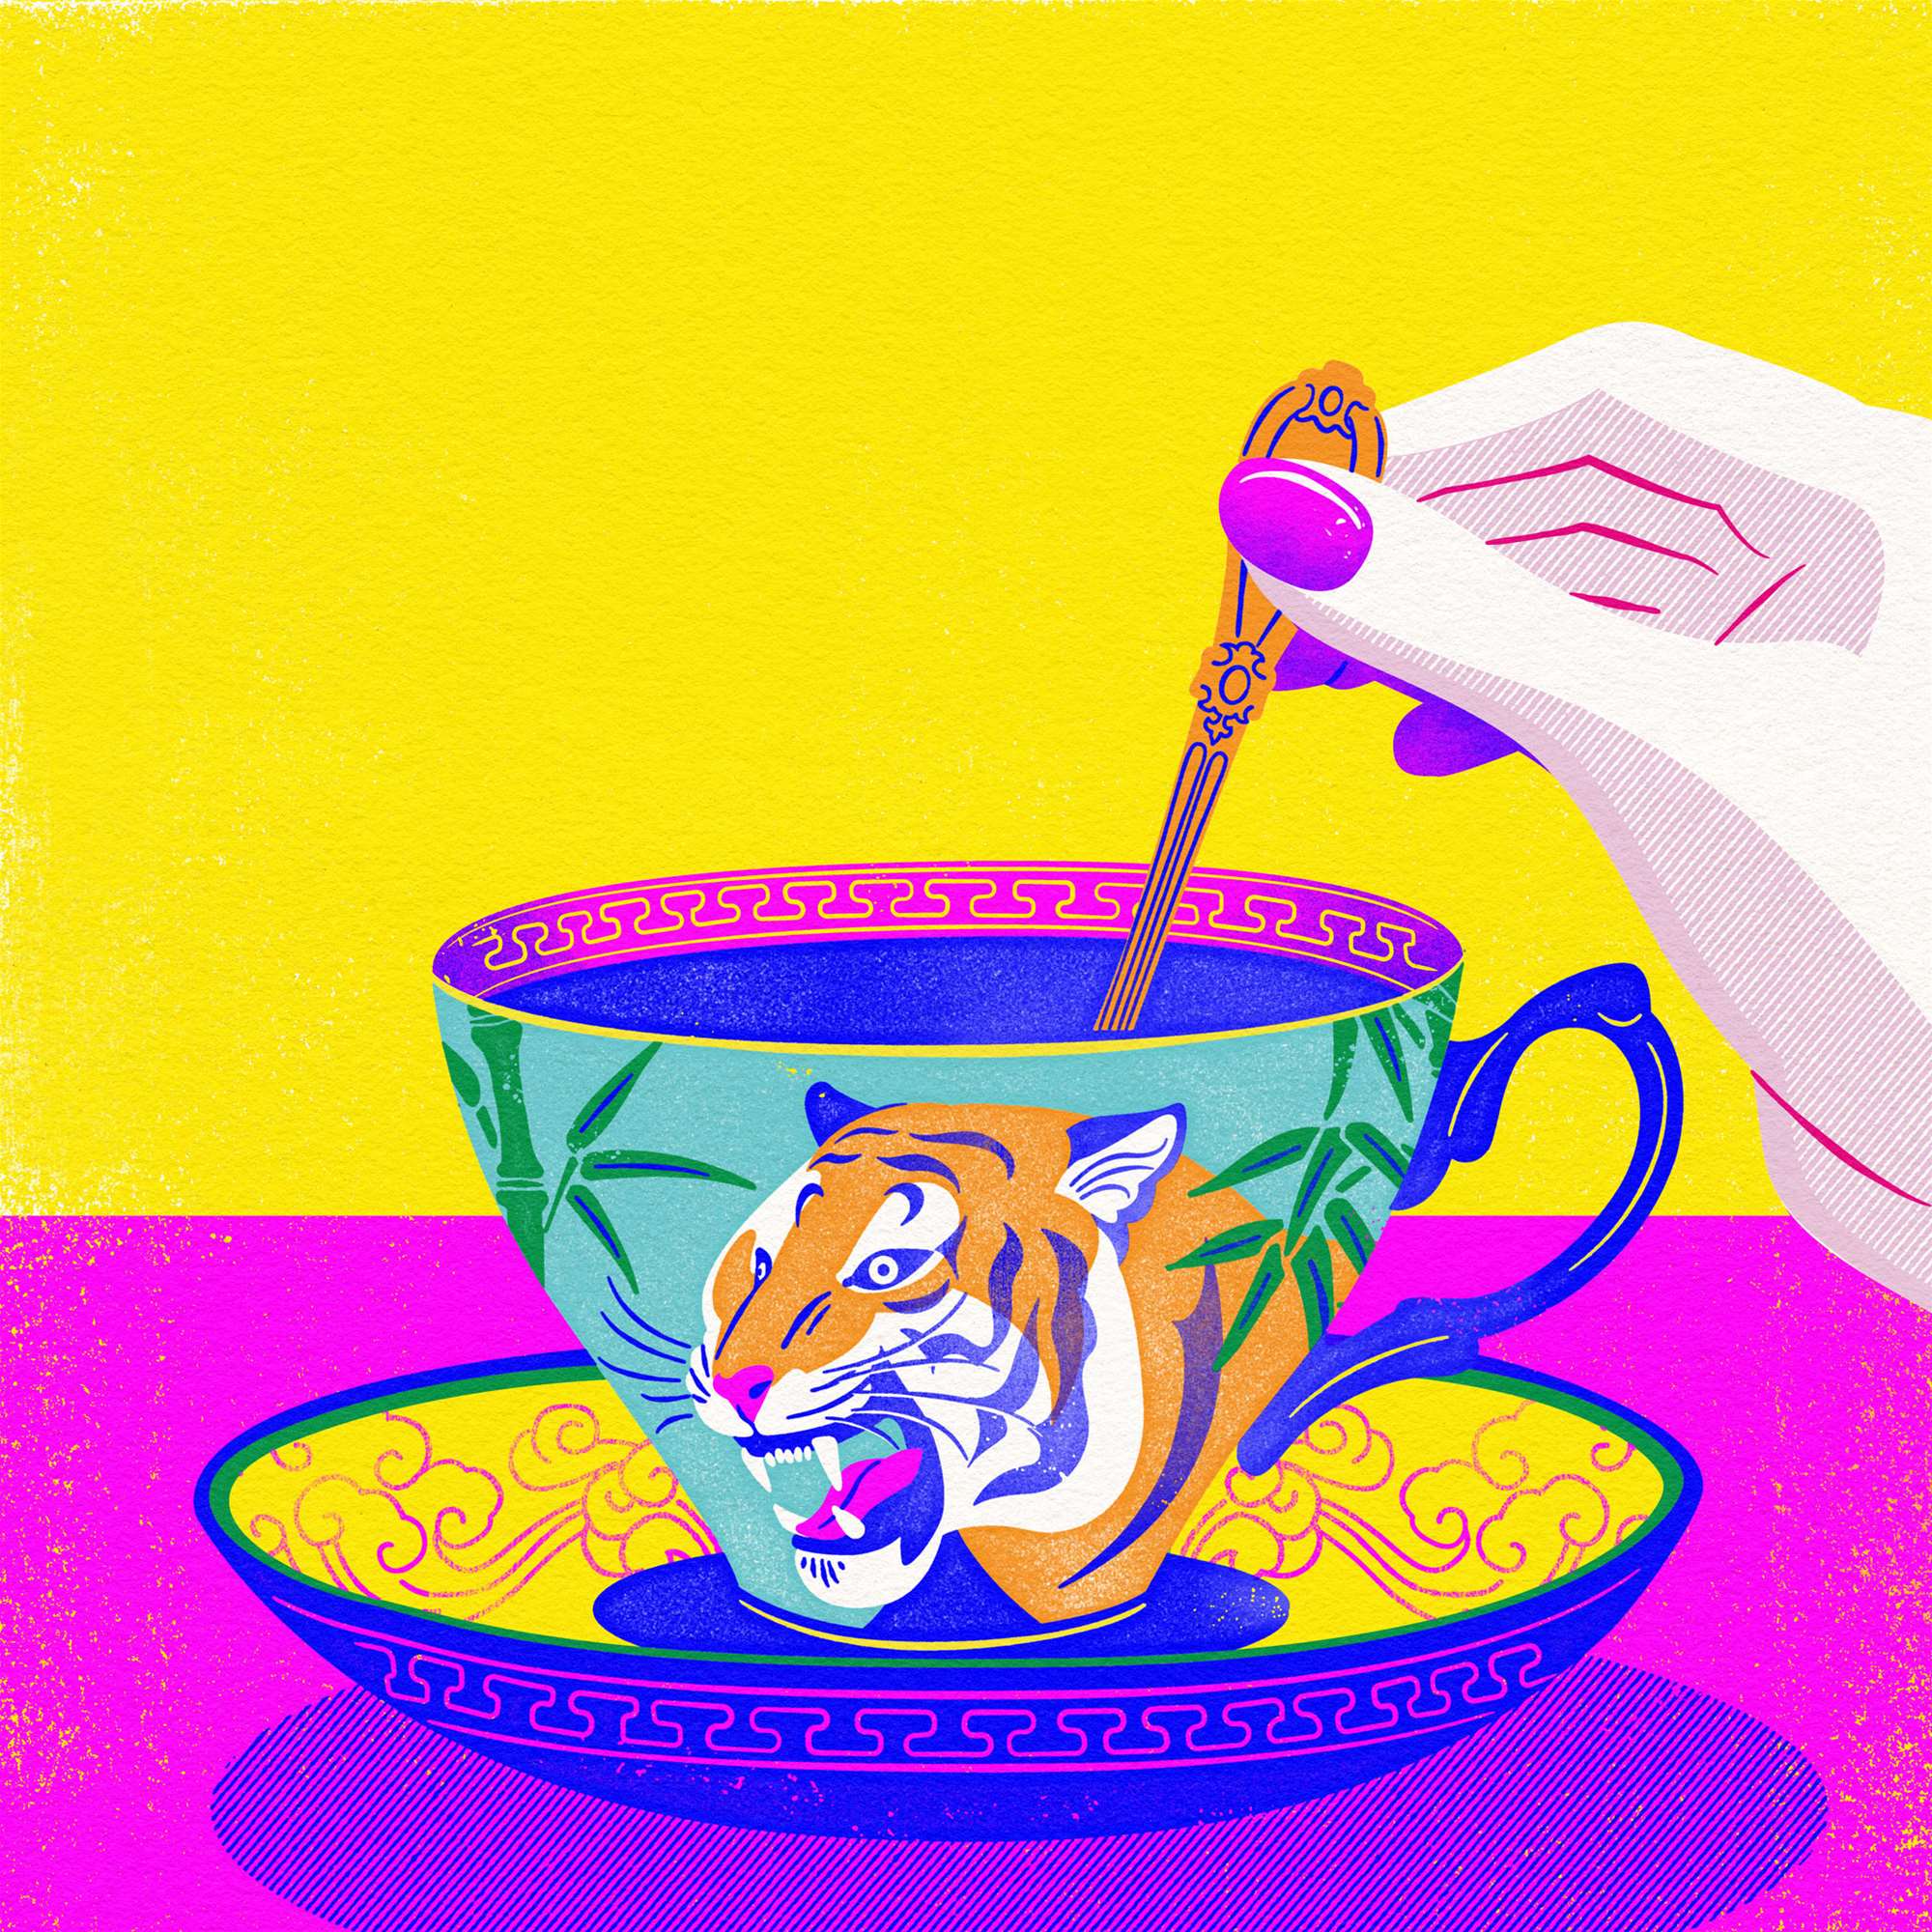 Susan Burghart, Pop art illustration of a teacup, digital art.